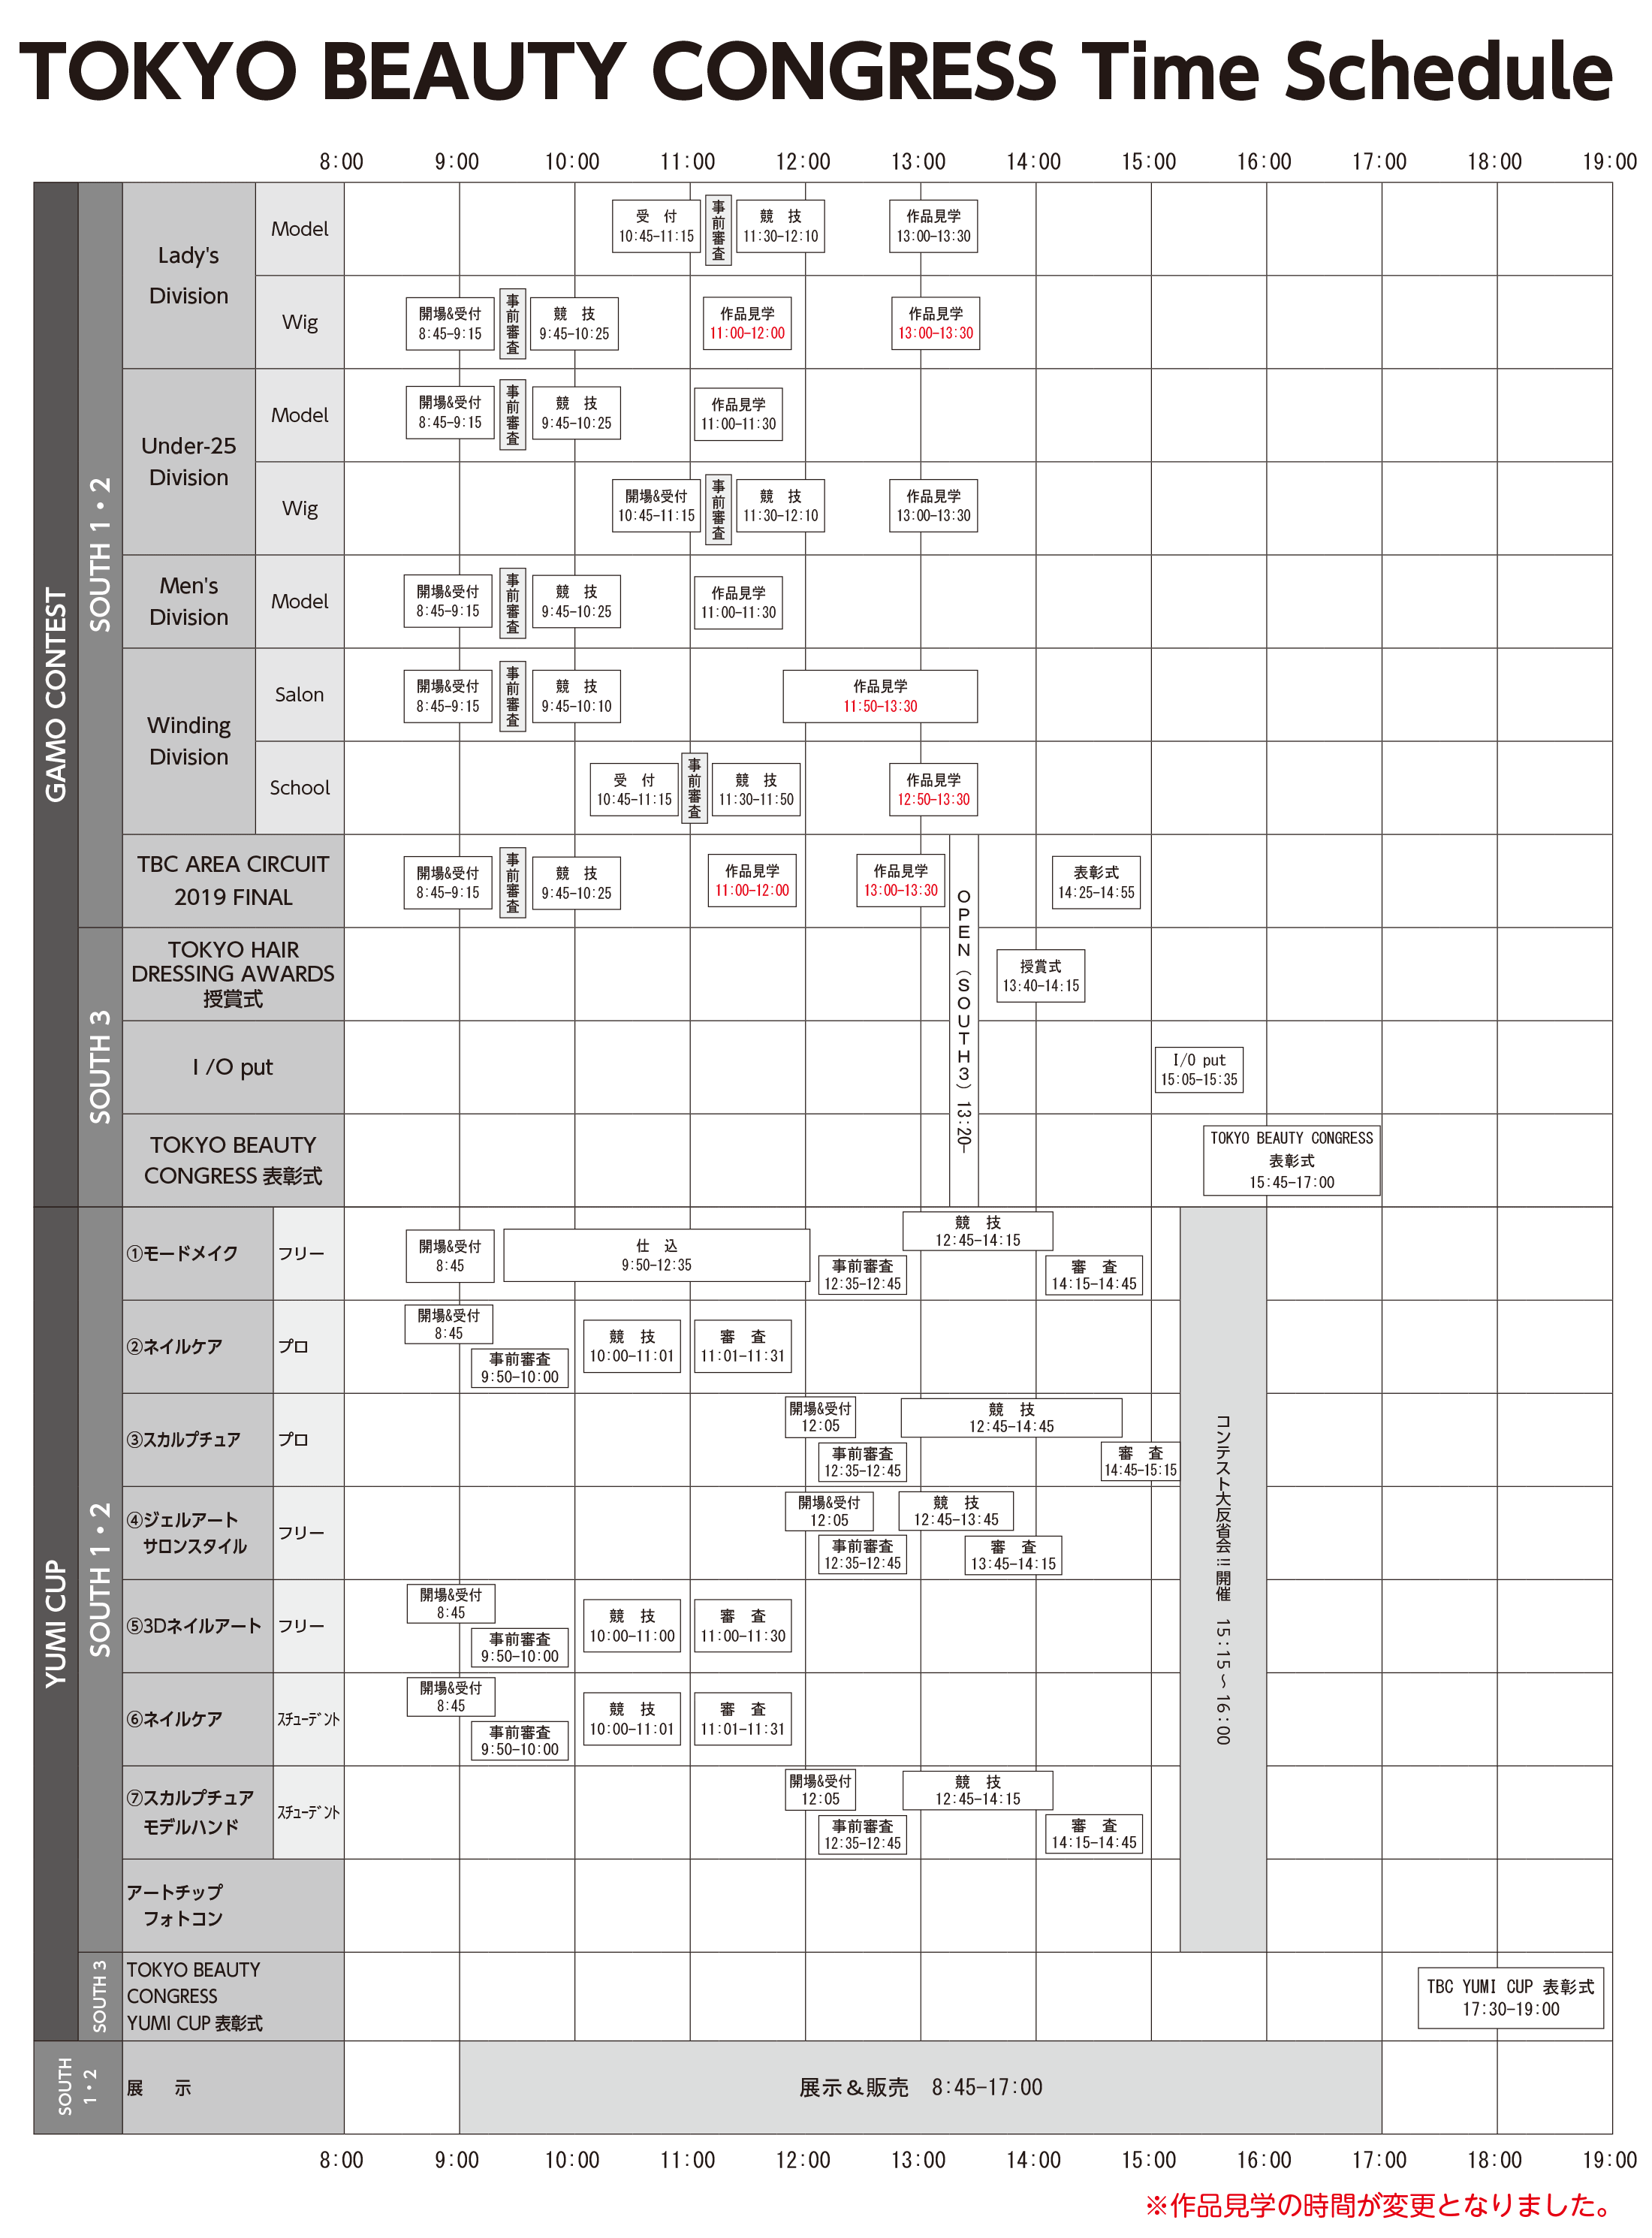 TOKYO BEAUTY CONGRESS Time Schedule